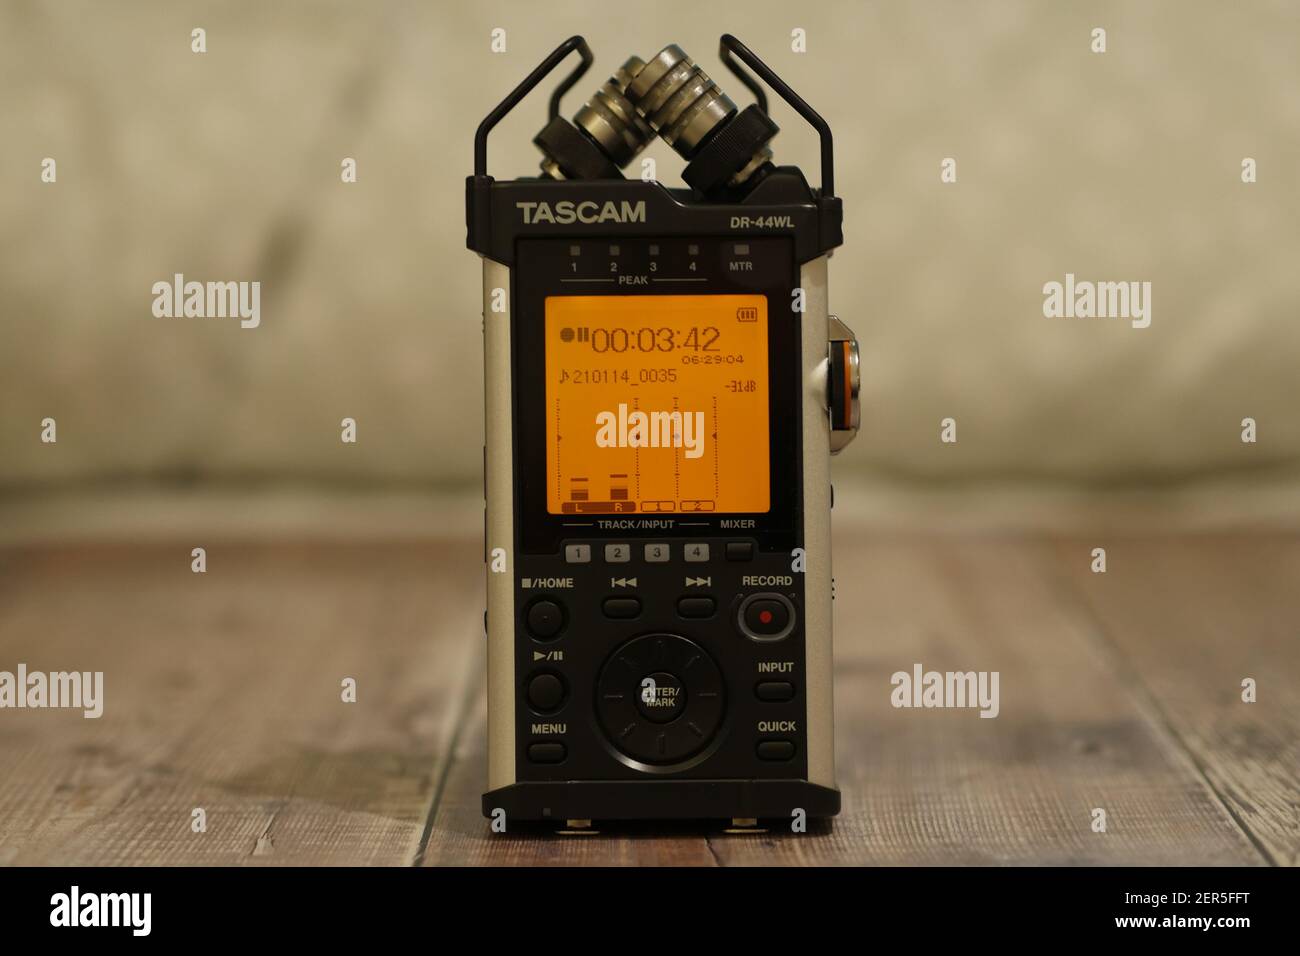 Tascam Portable Multitrack Audio Recorder for Location Recording of Sound Stock Photo